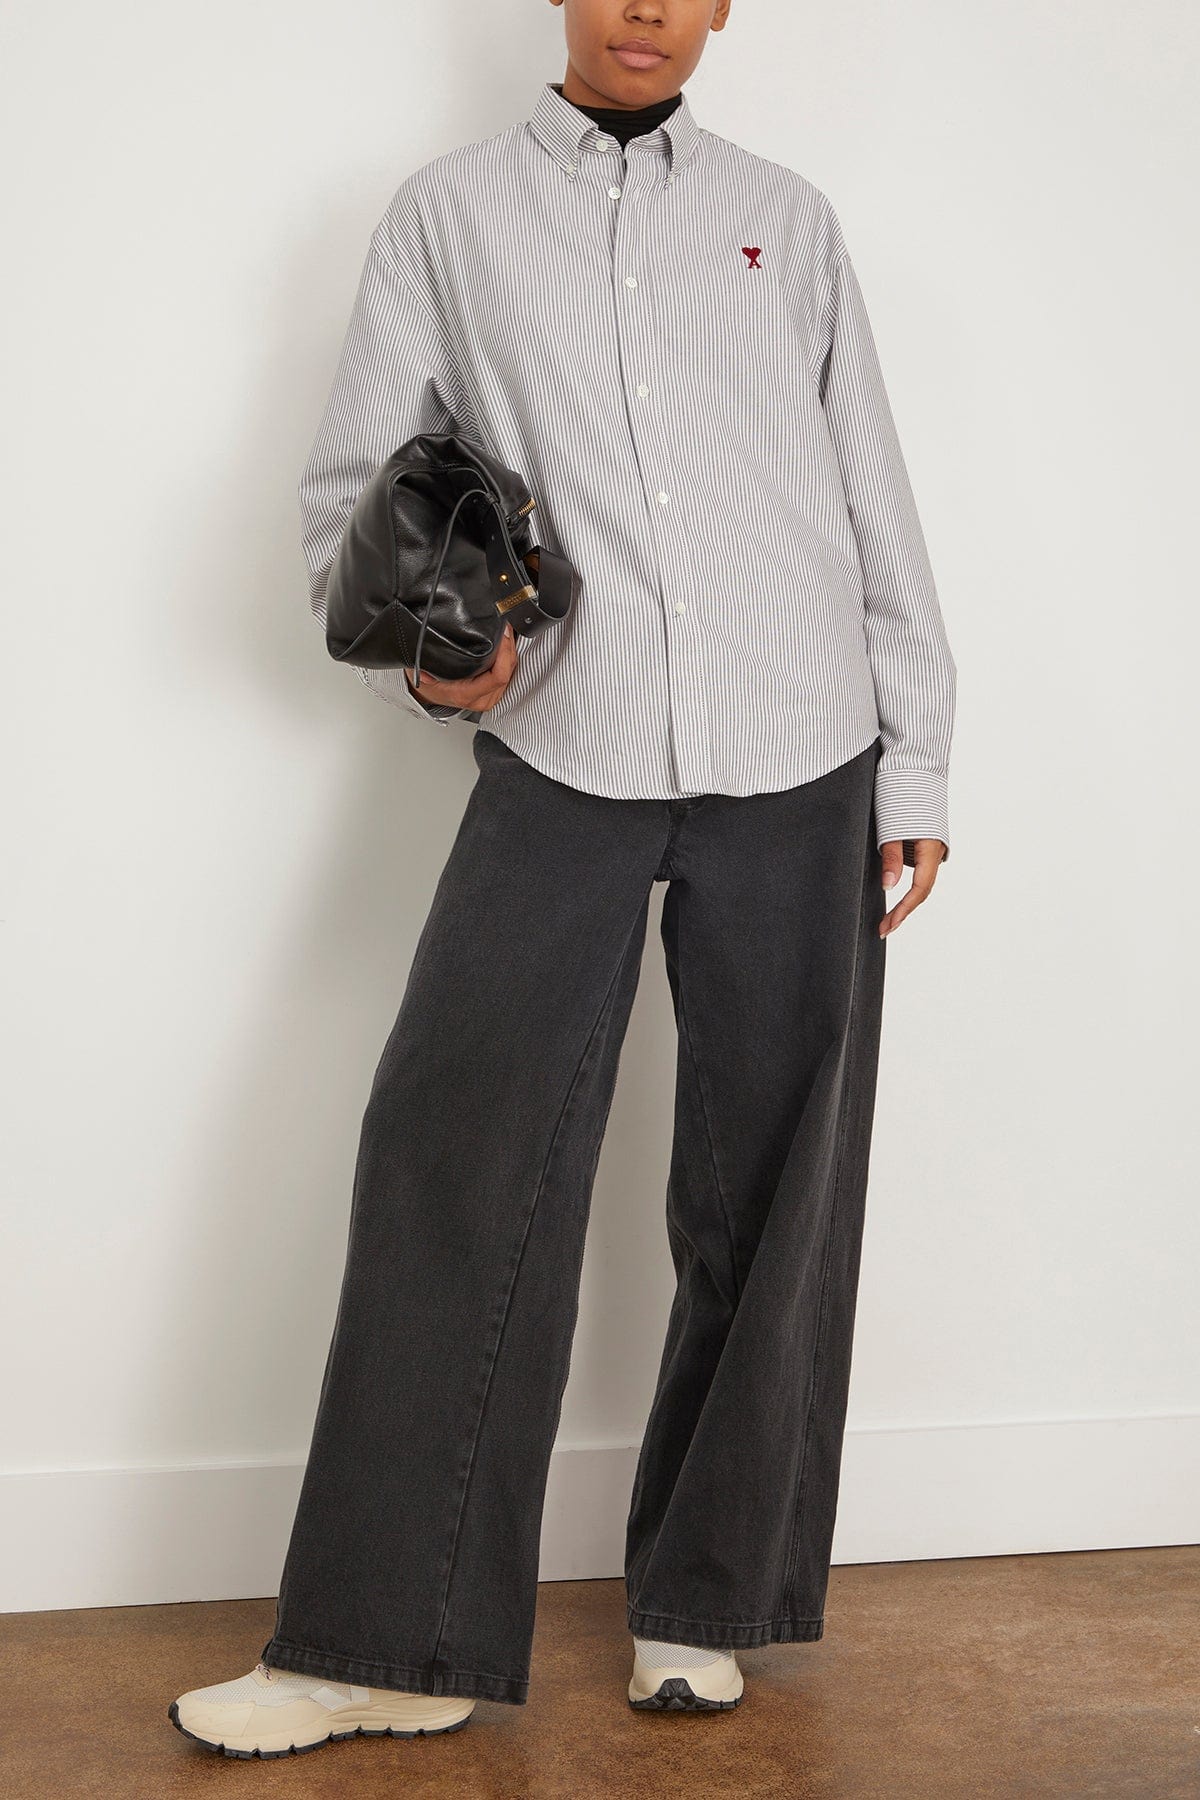 Ami Paris Tops Boxy Fit Striped Shirt in Black/Natural